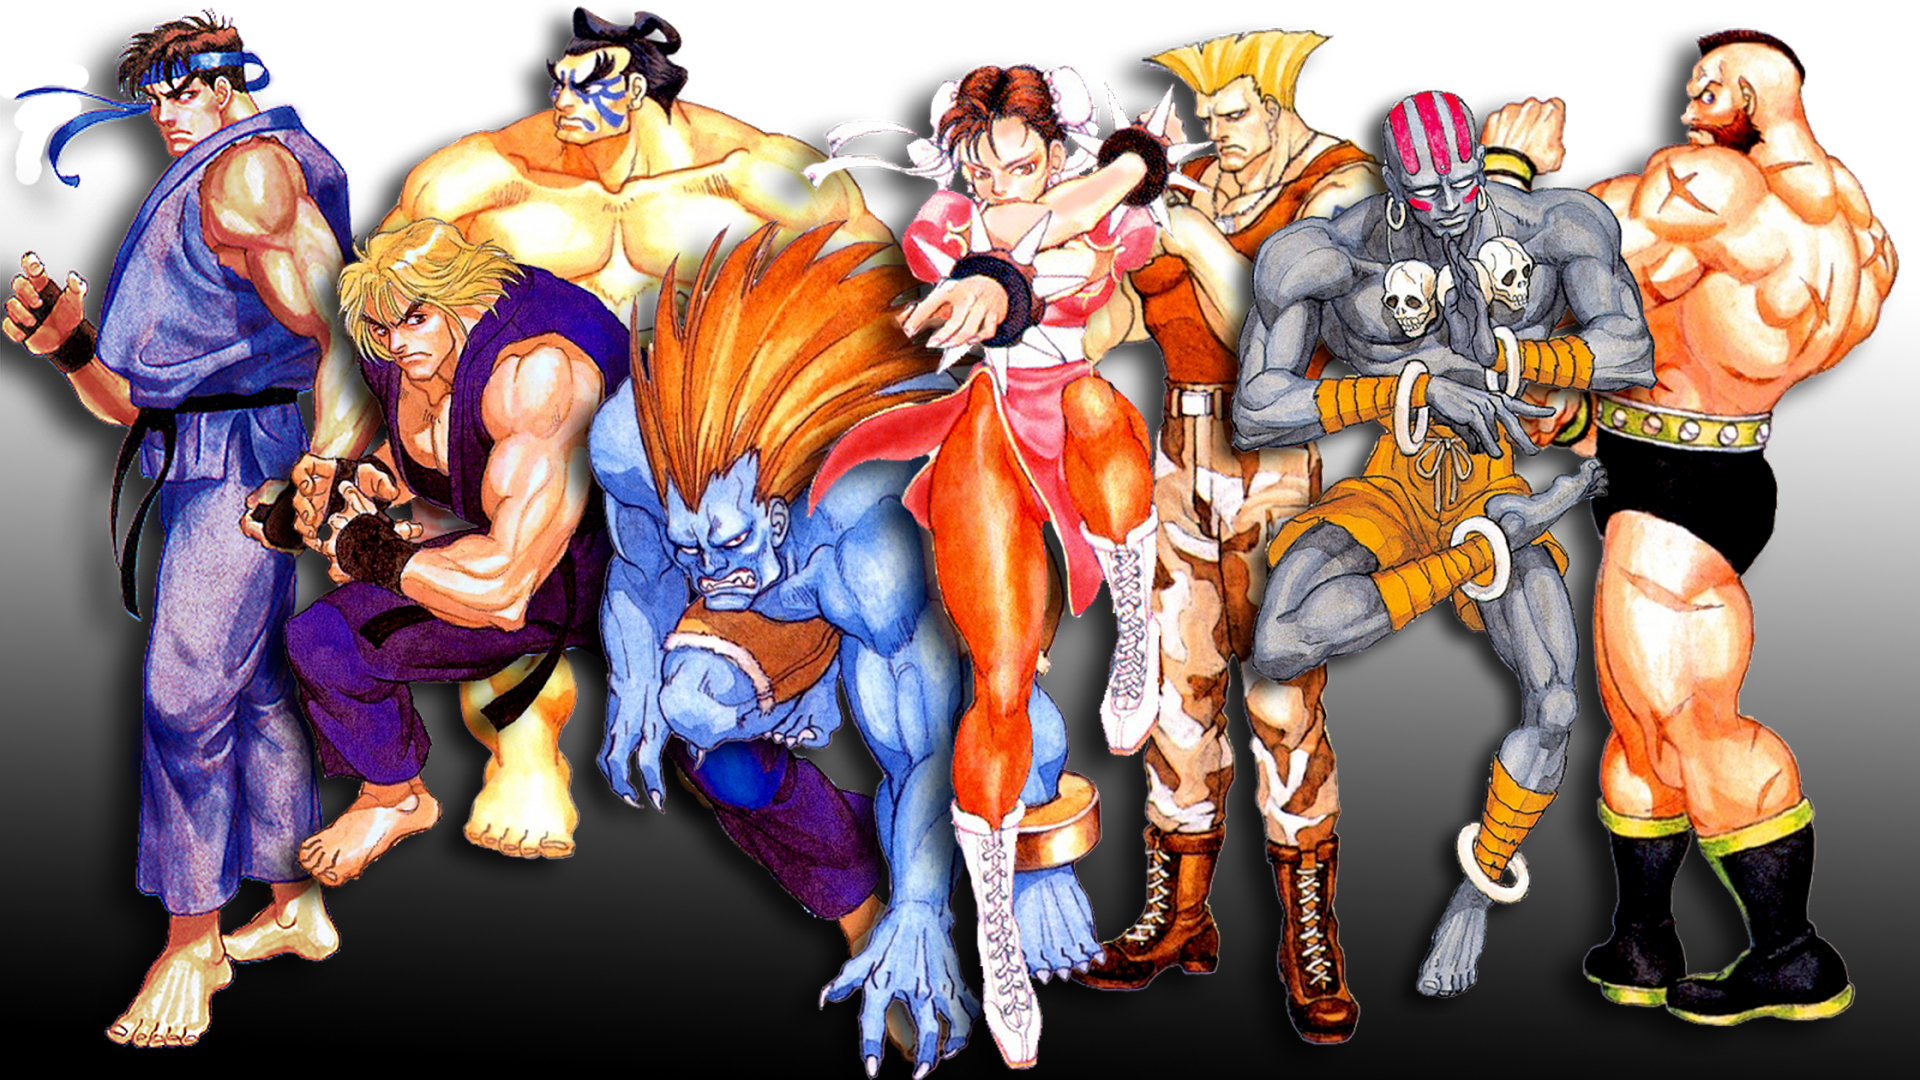 Street Fighter II': Hyper Champion Edition